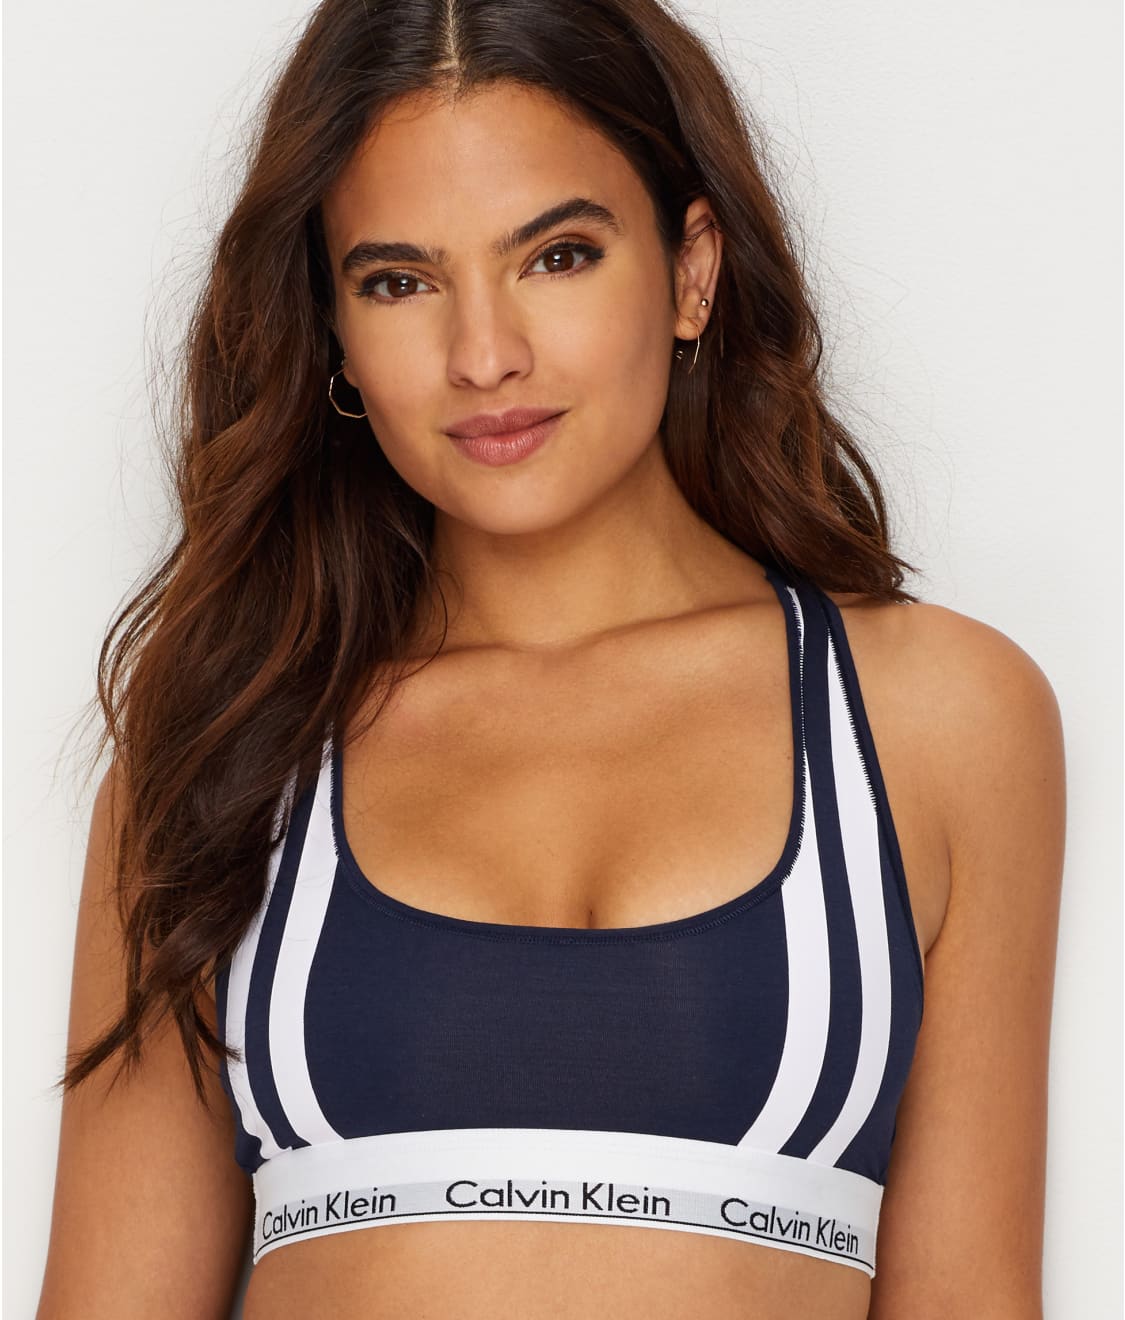 Calvin Klein Women's Unlined Bra Set Gift Packages, Shoreline